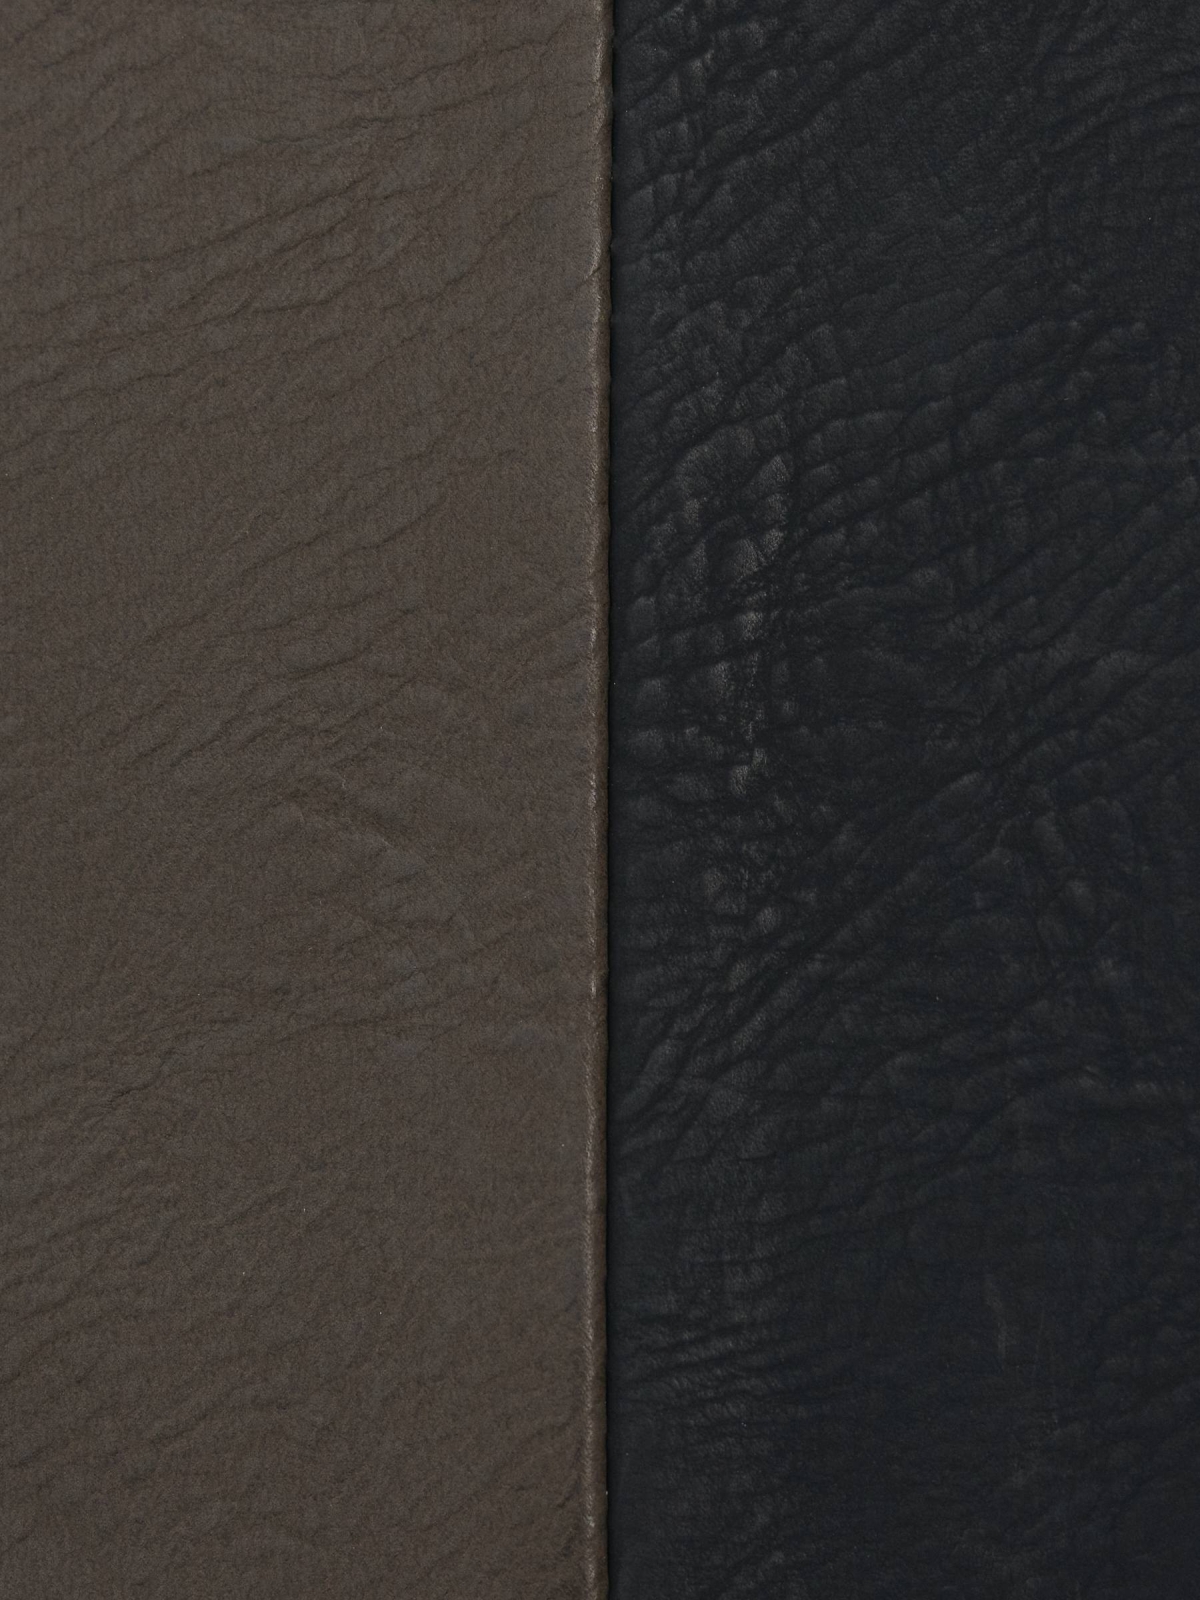 Two-tone faux leather wallet black detail view